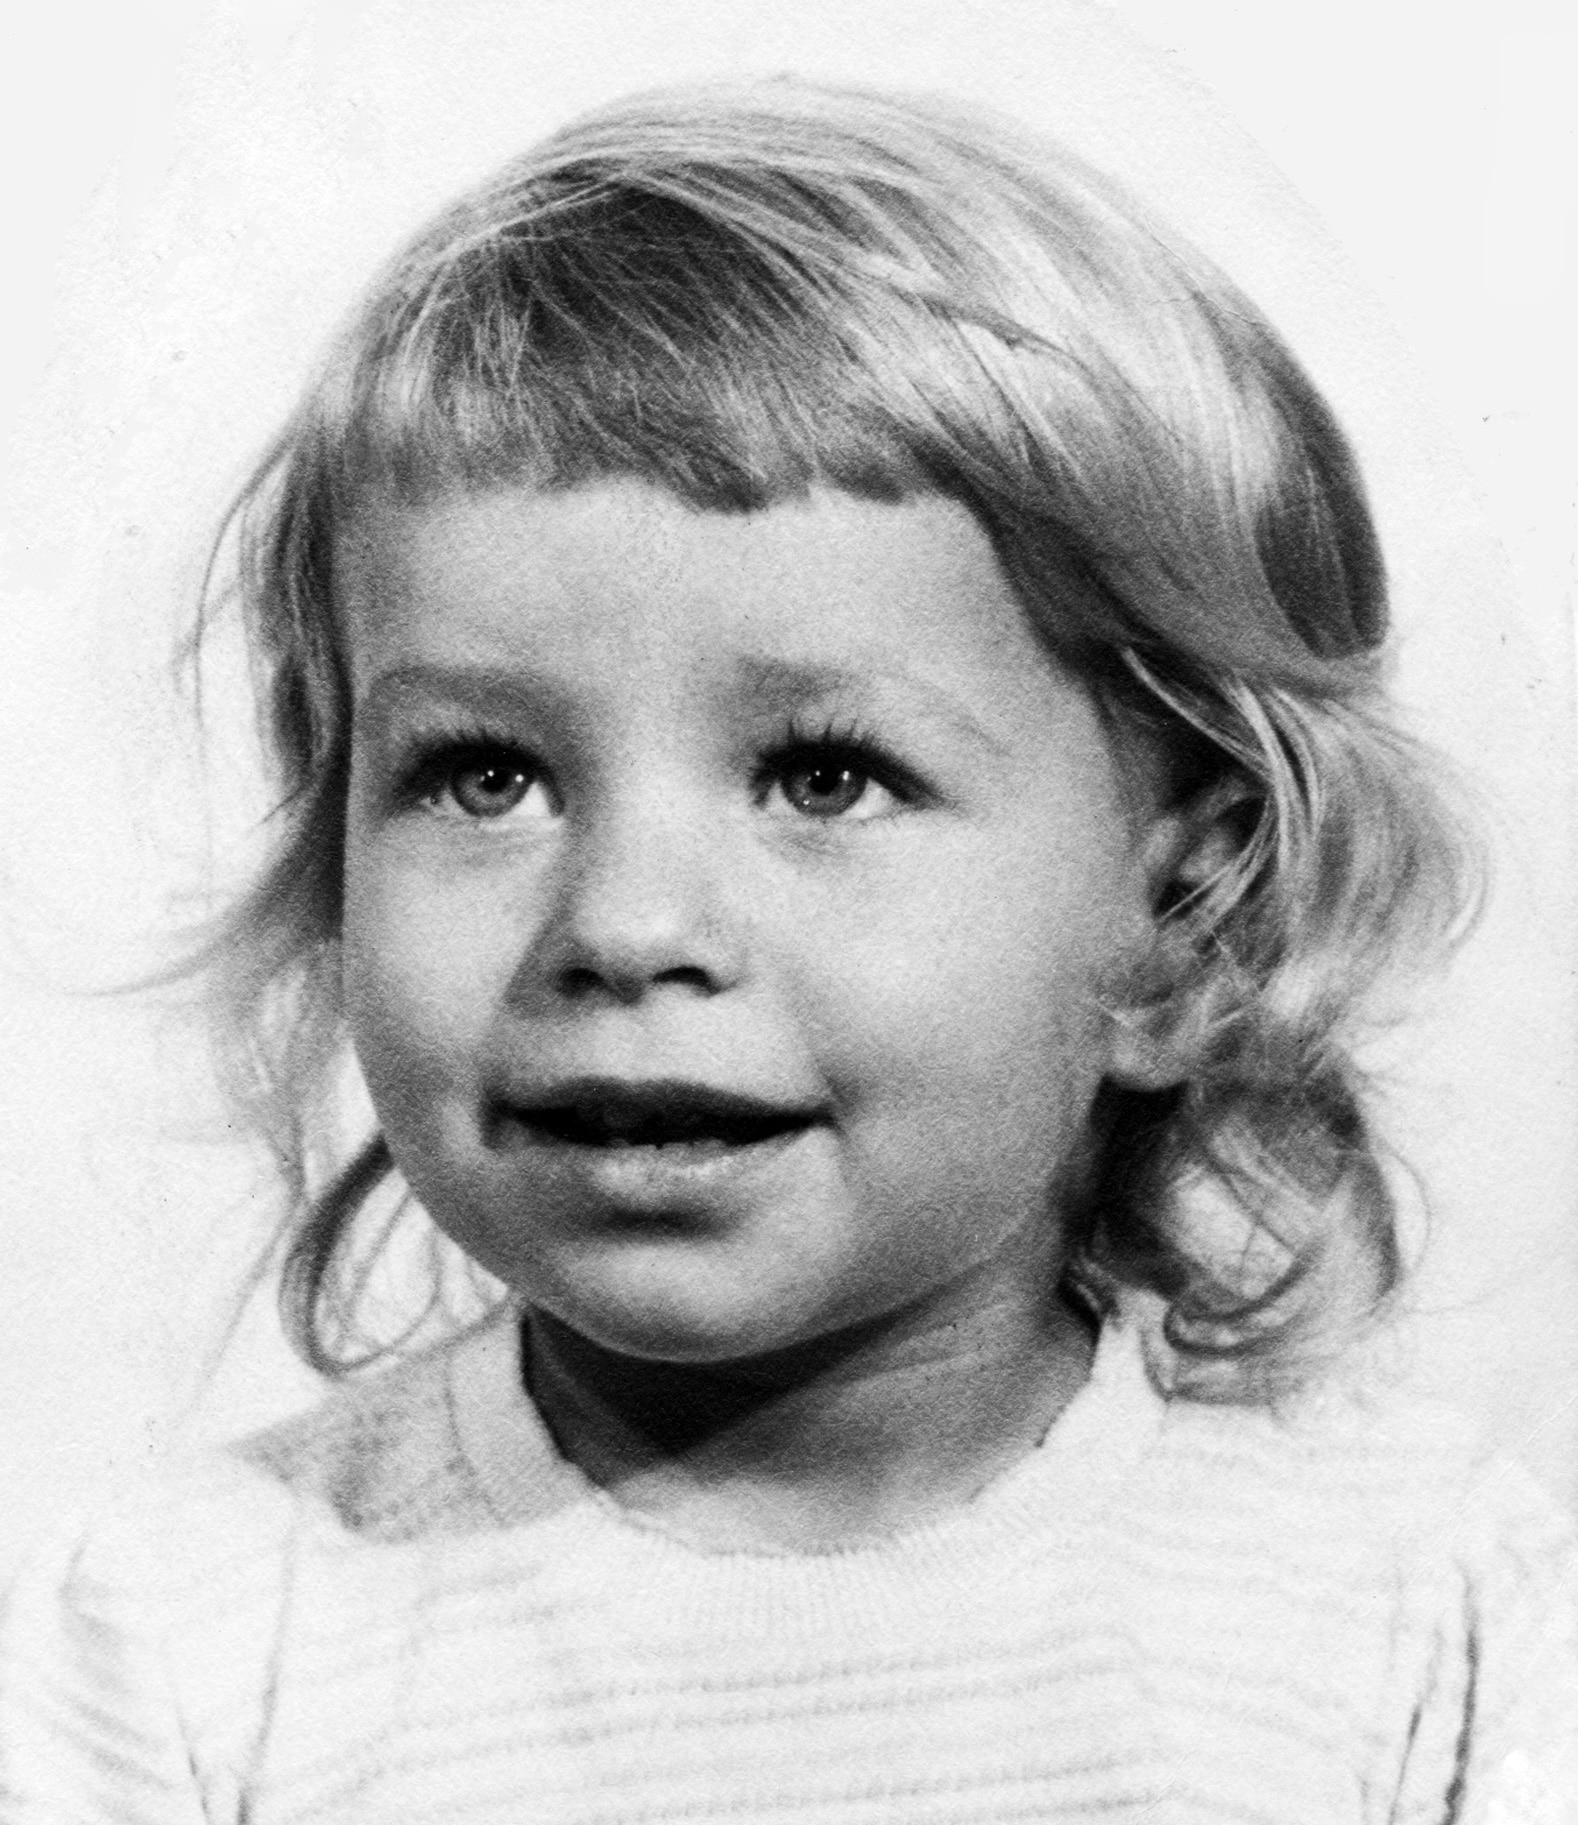 Headshot of Eileen Davidson as a little girl smiling